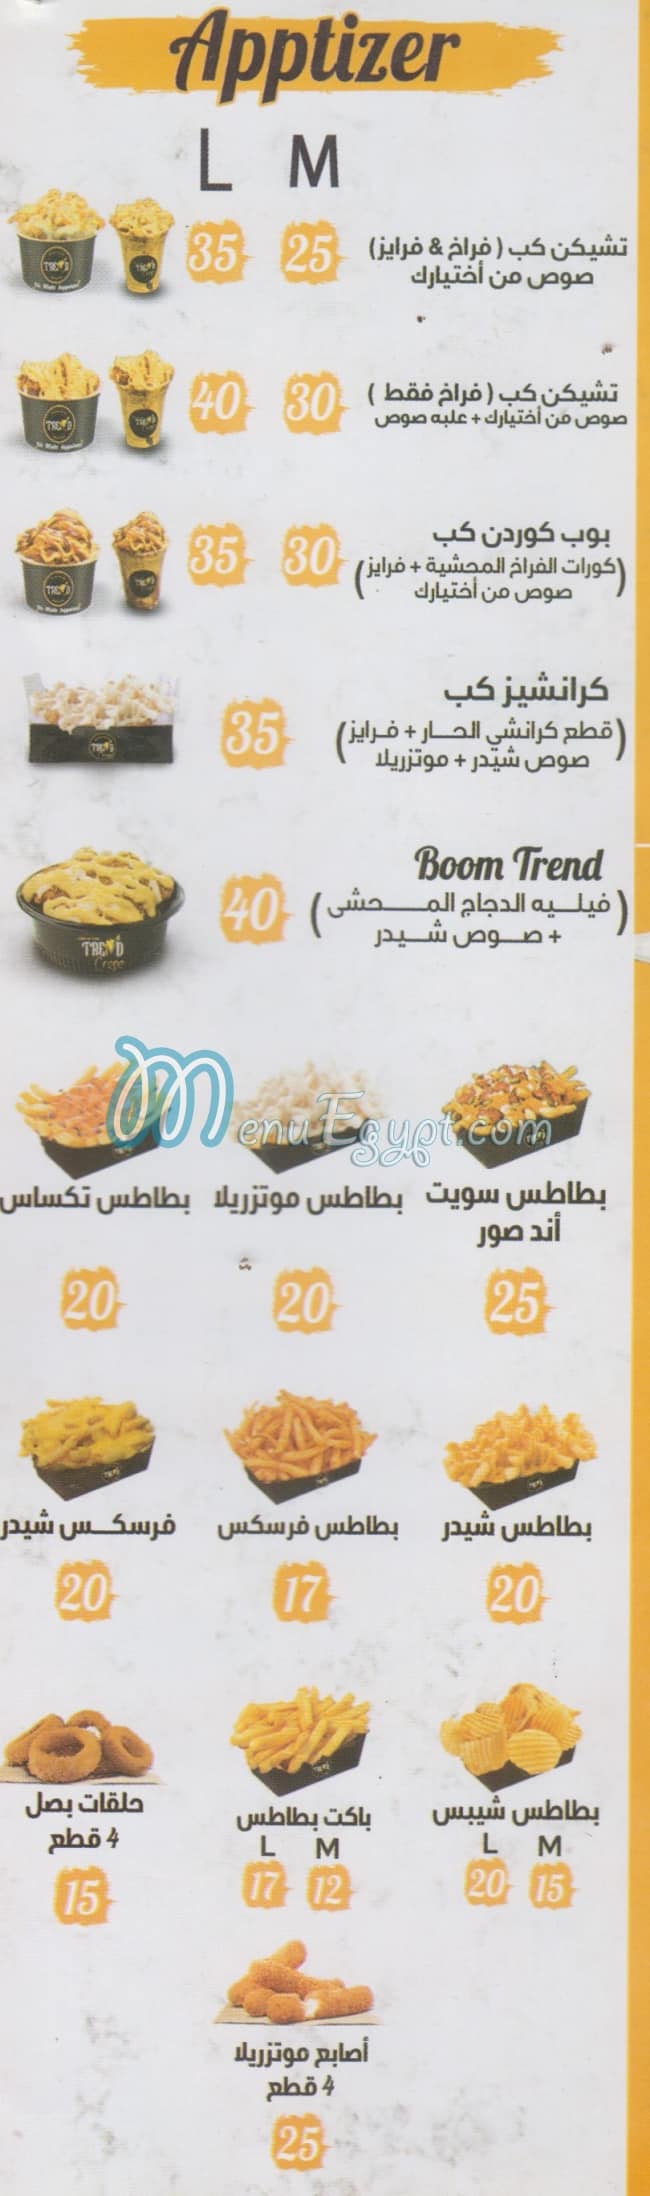 Trend Crepe menu Egypt 2